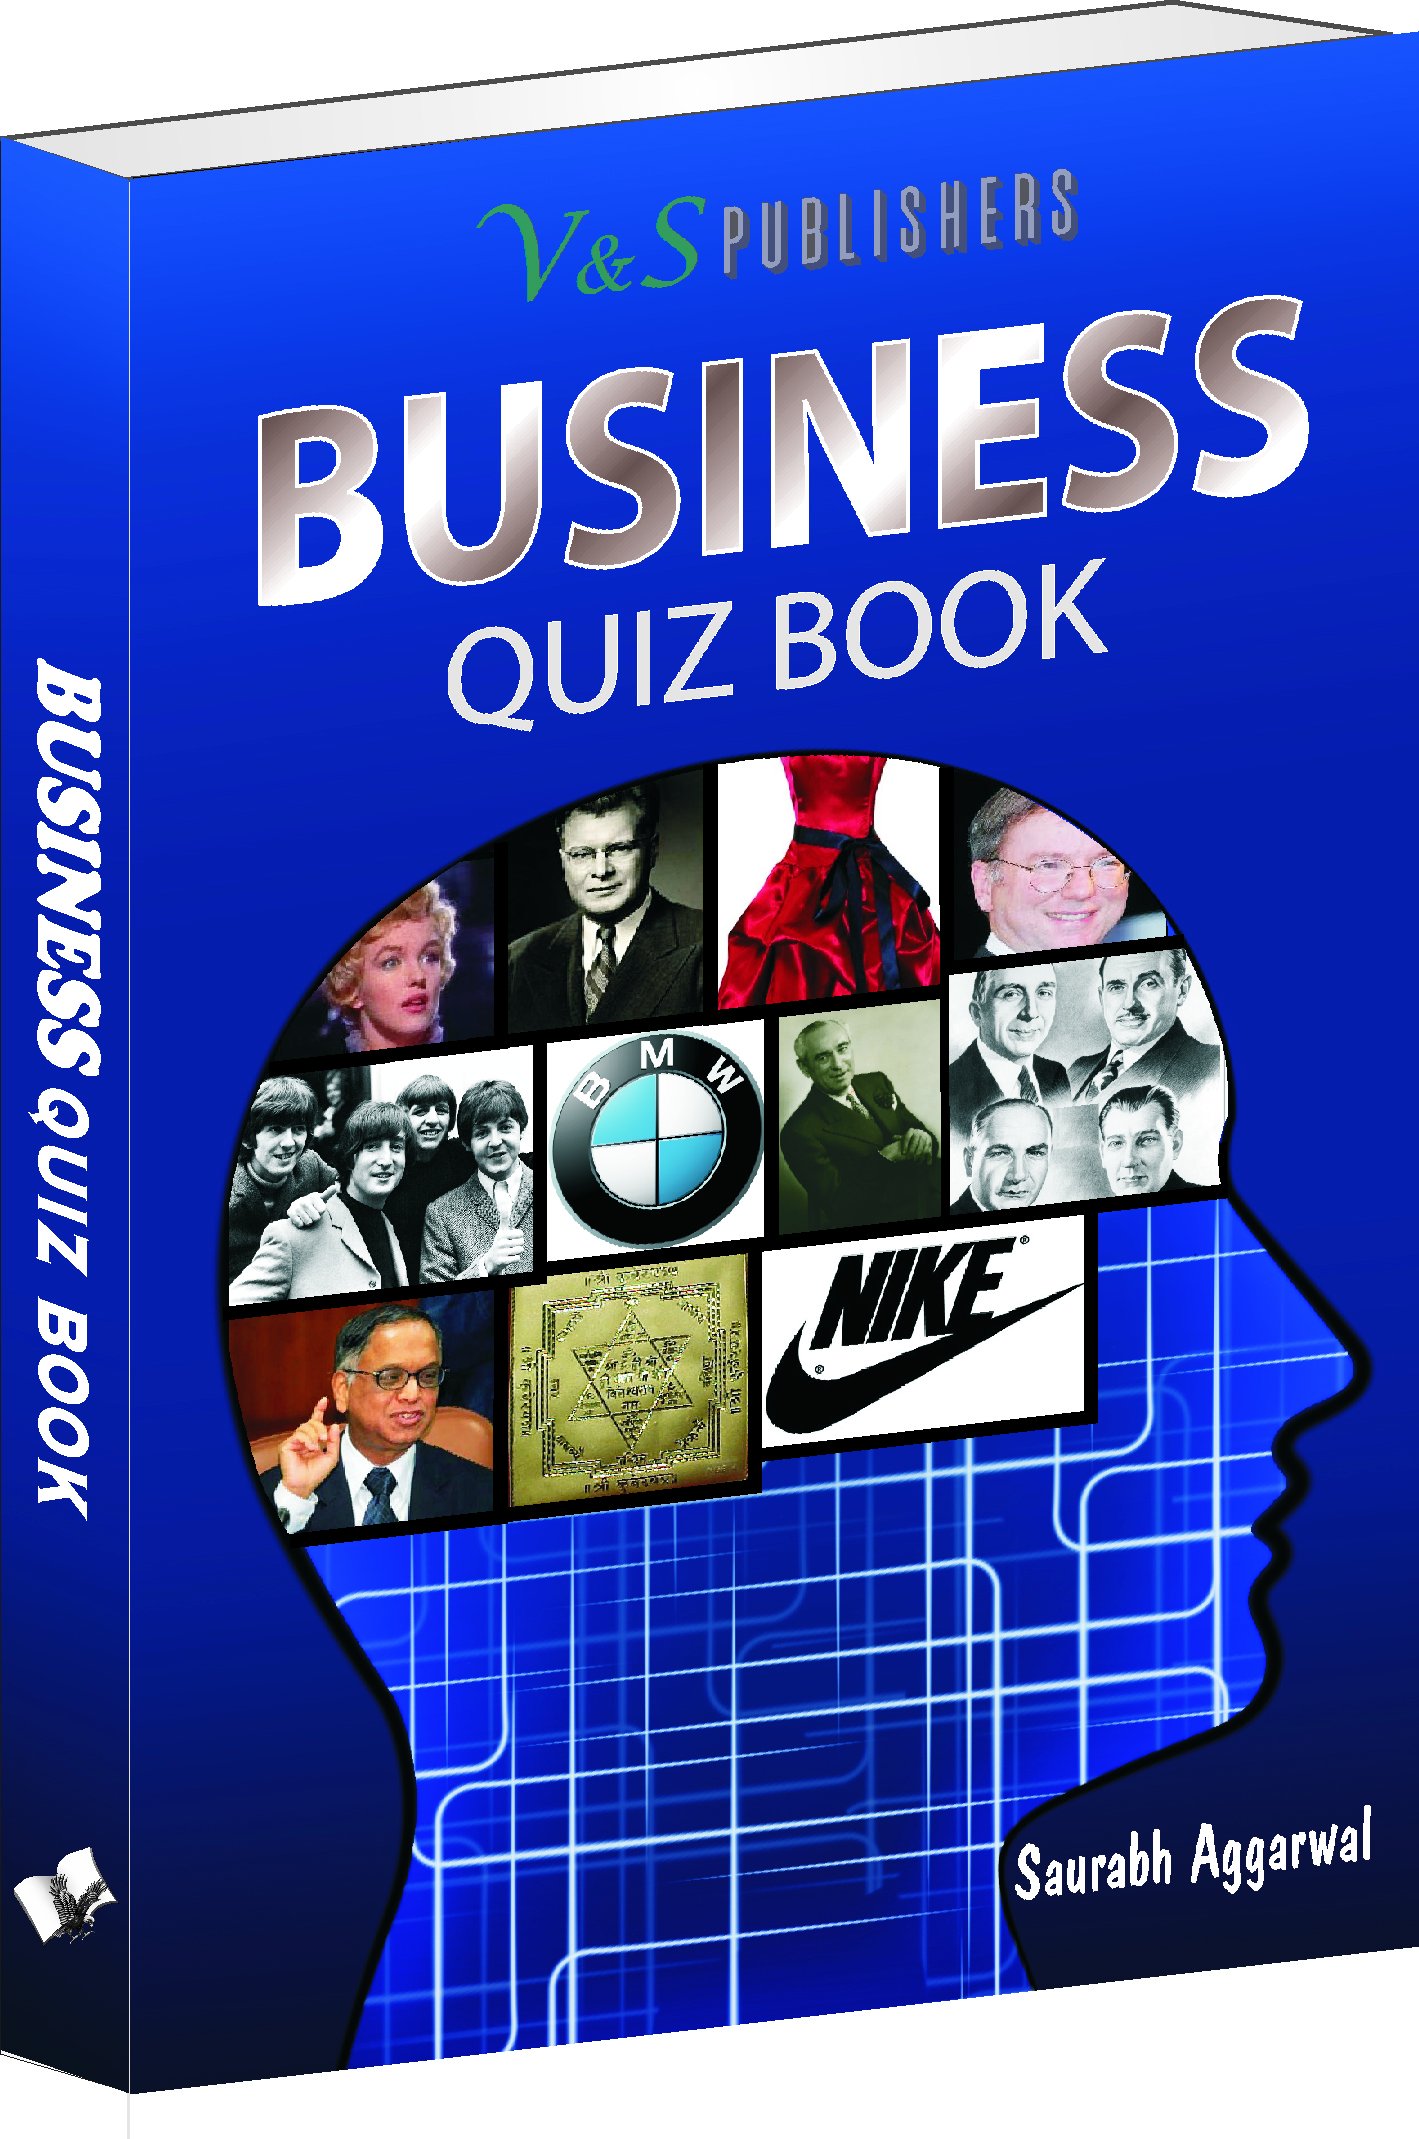 Business Quiz Book-Polish your business knowledge through quizzes